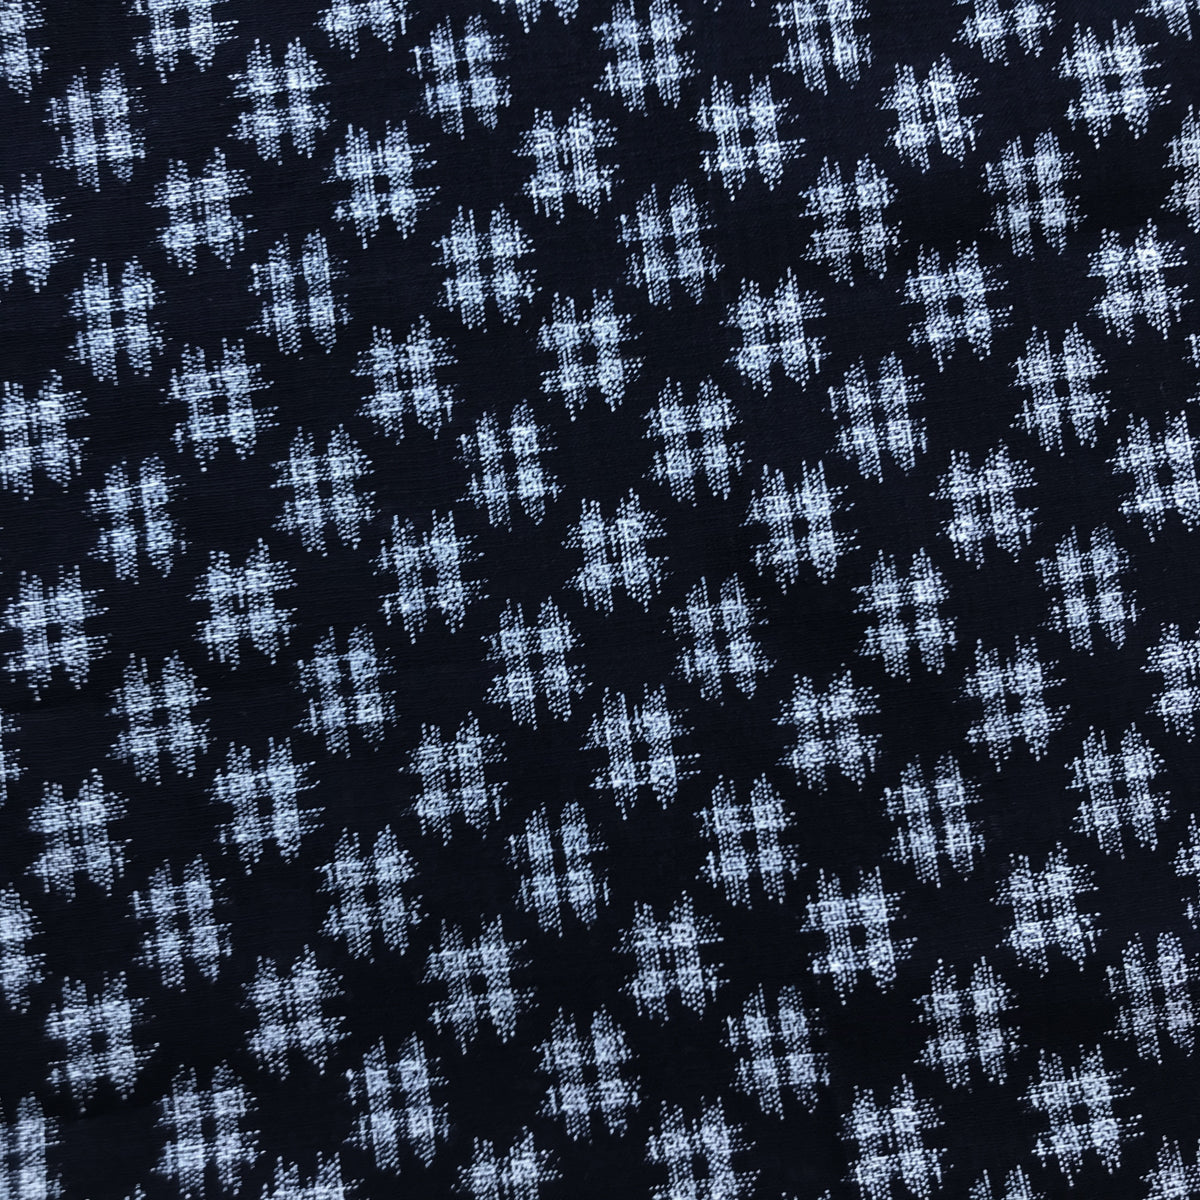 Japanese Nara Cotton Canvas Indigo Handkerchief 27.5 x 27.5 "GEO"